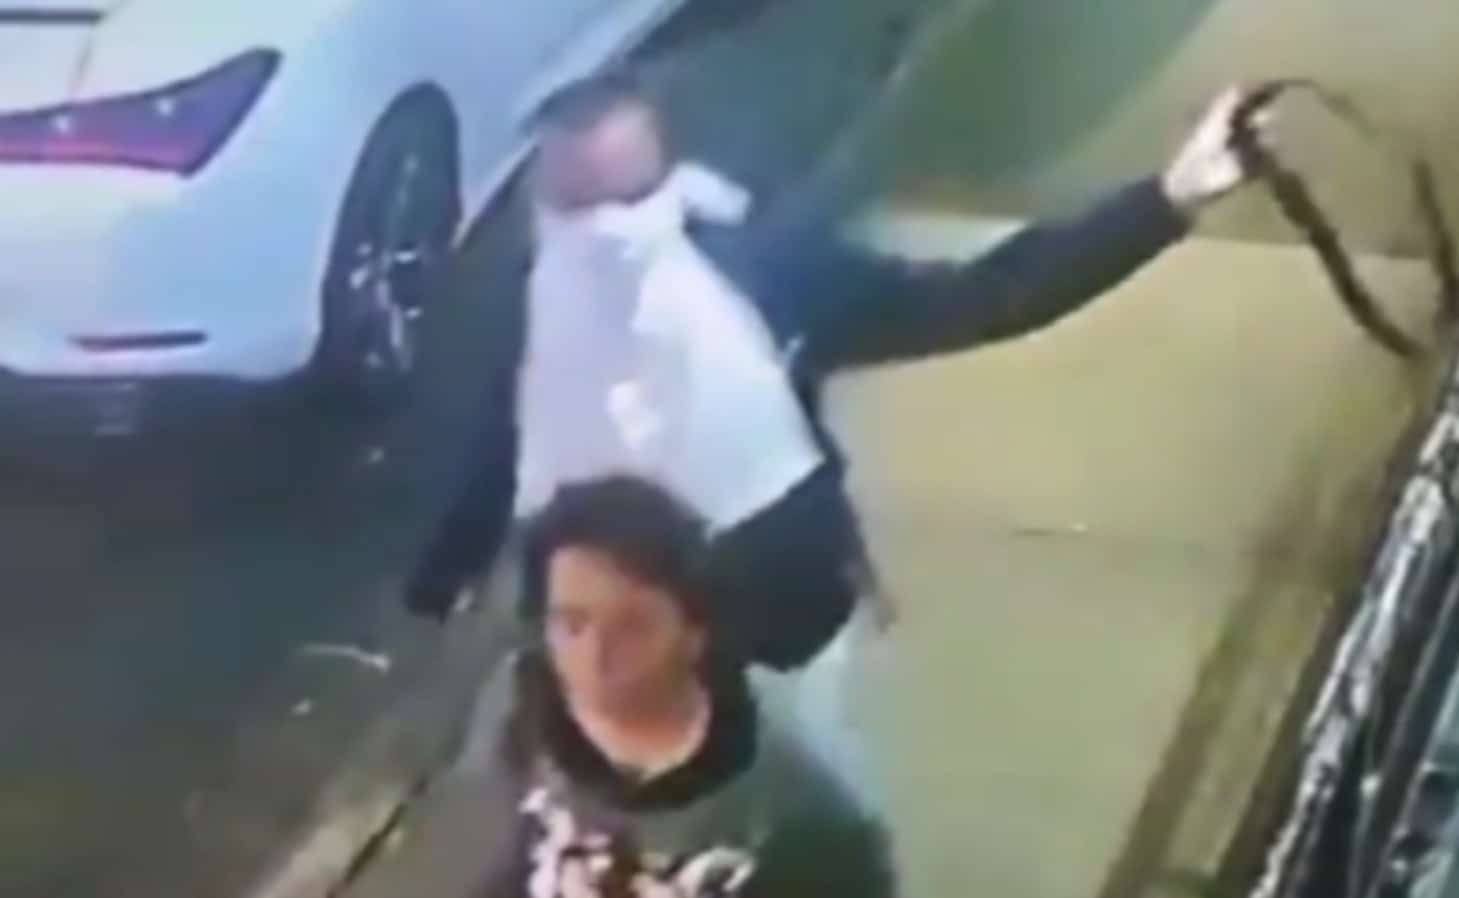 GRAPHIC WARNING: Disturbing Video Shows Woman Being Attacked With Belt Around Neck